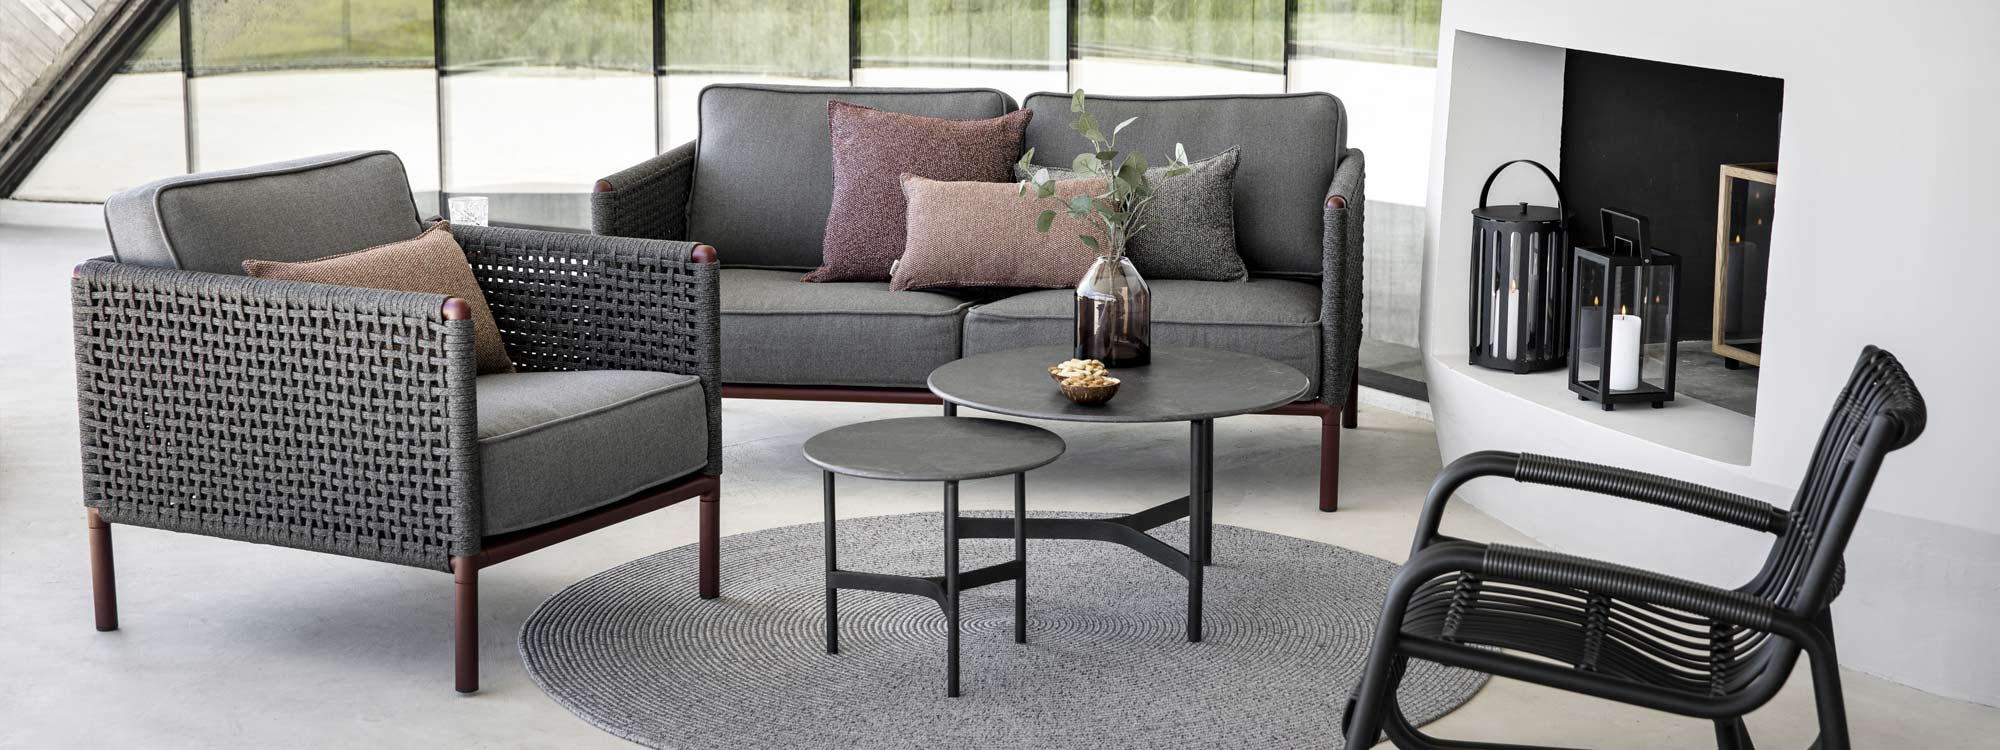 Bordeaux & Dark Grey-finish Encore modern garden lounge set includes designer garden sofas in high quality outdoor furniture materials by Caneline luxury garden furniture